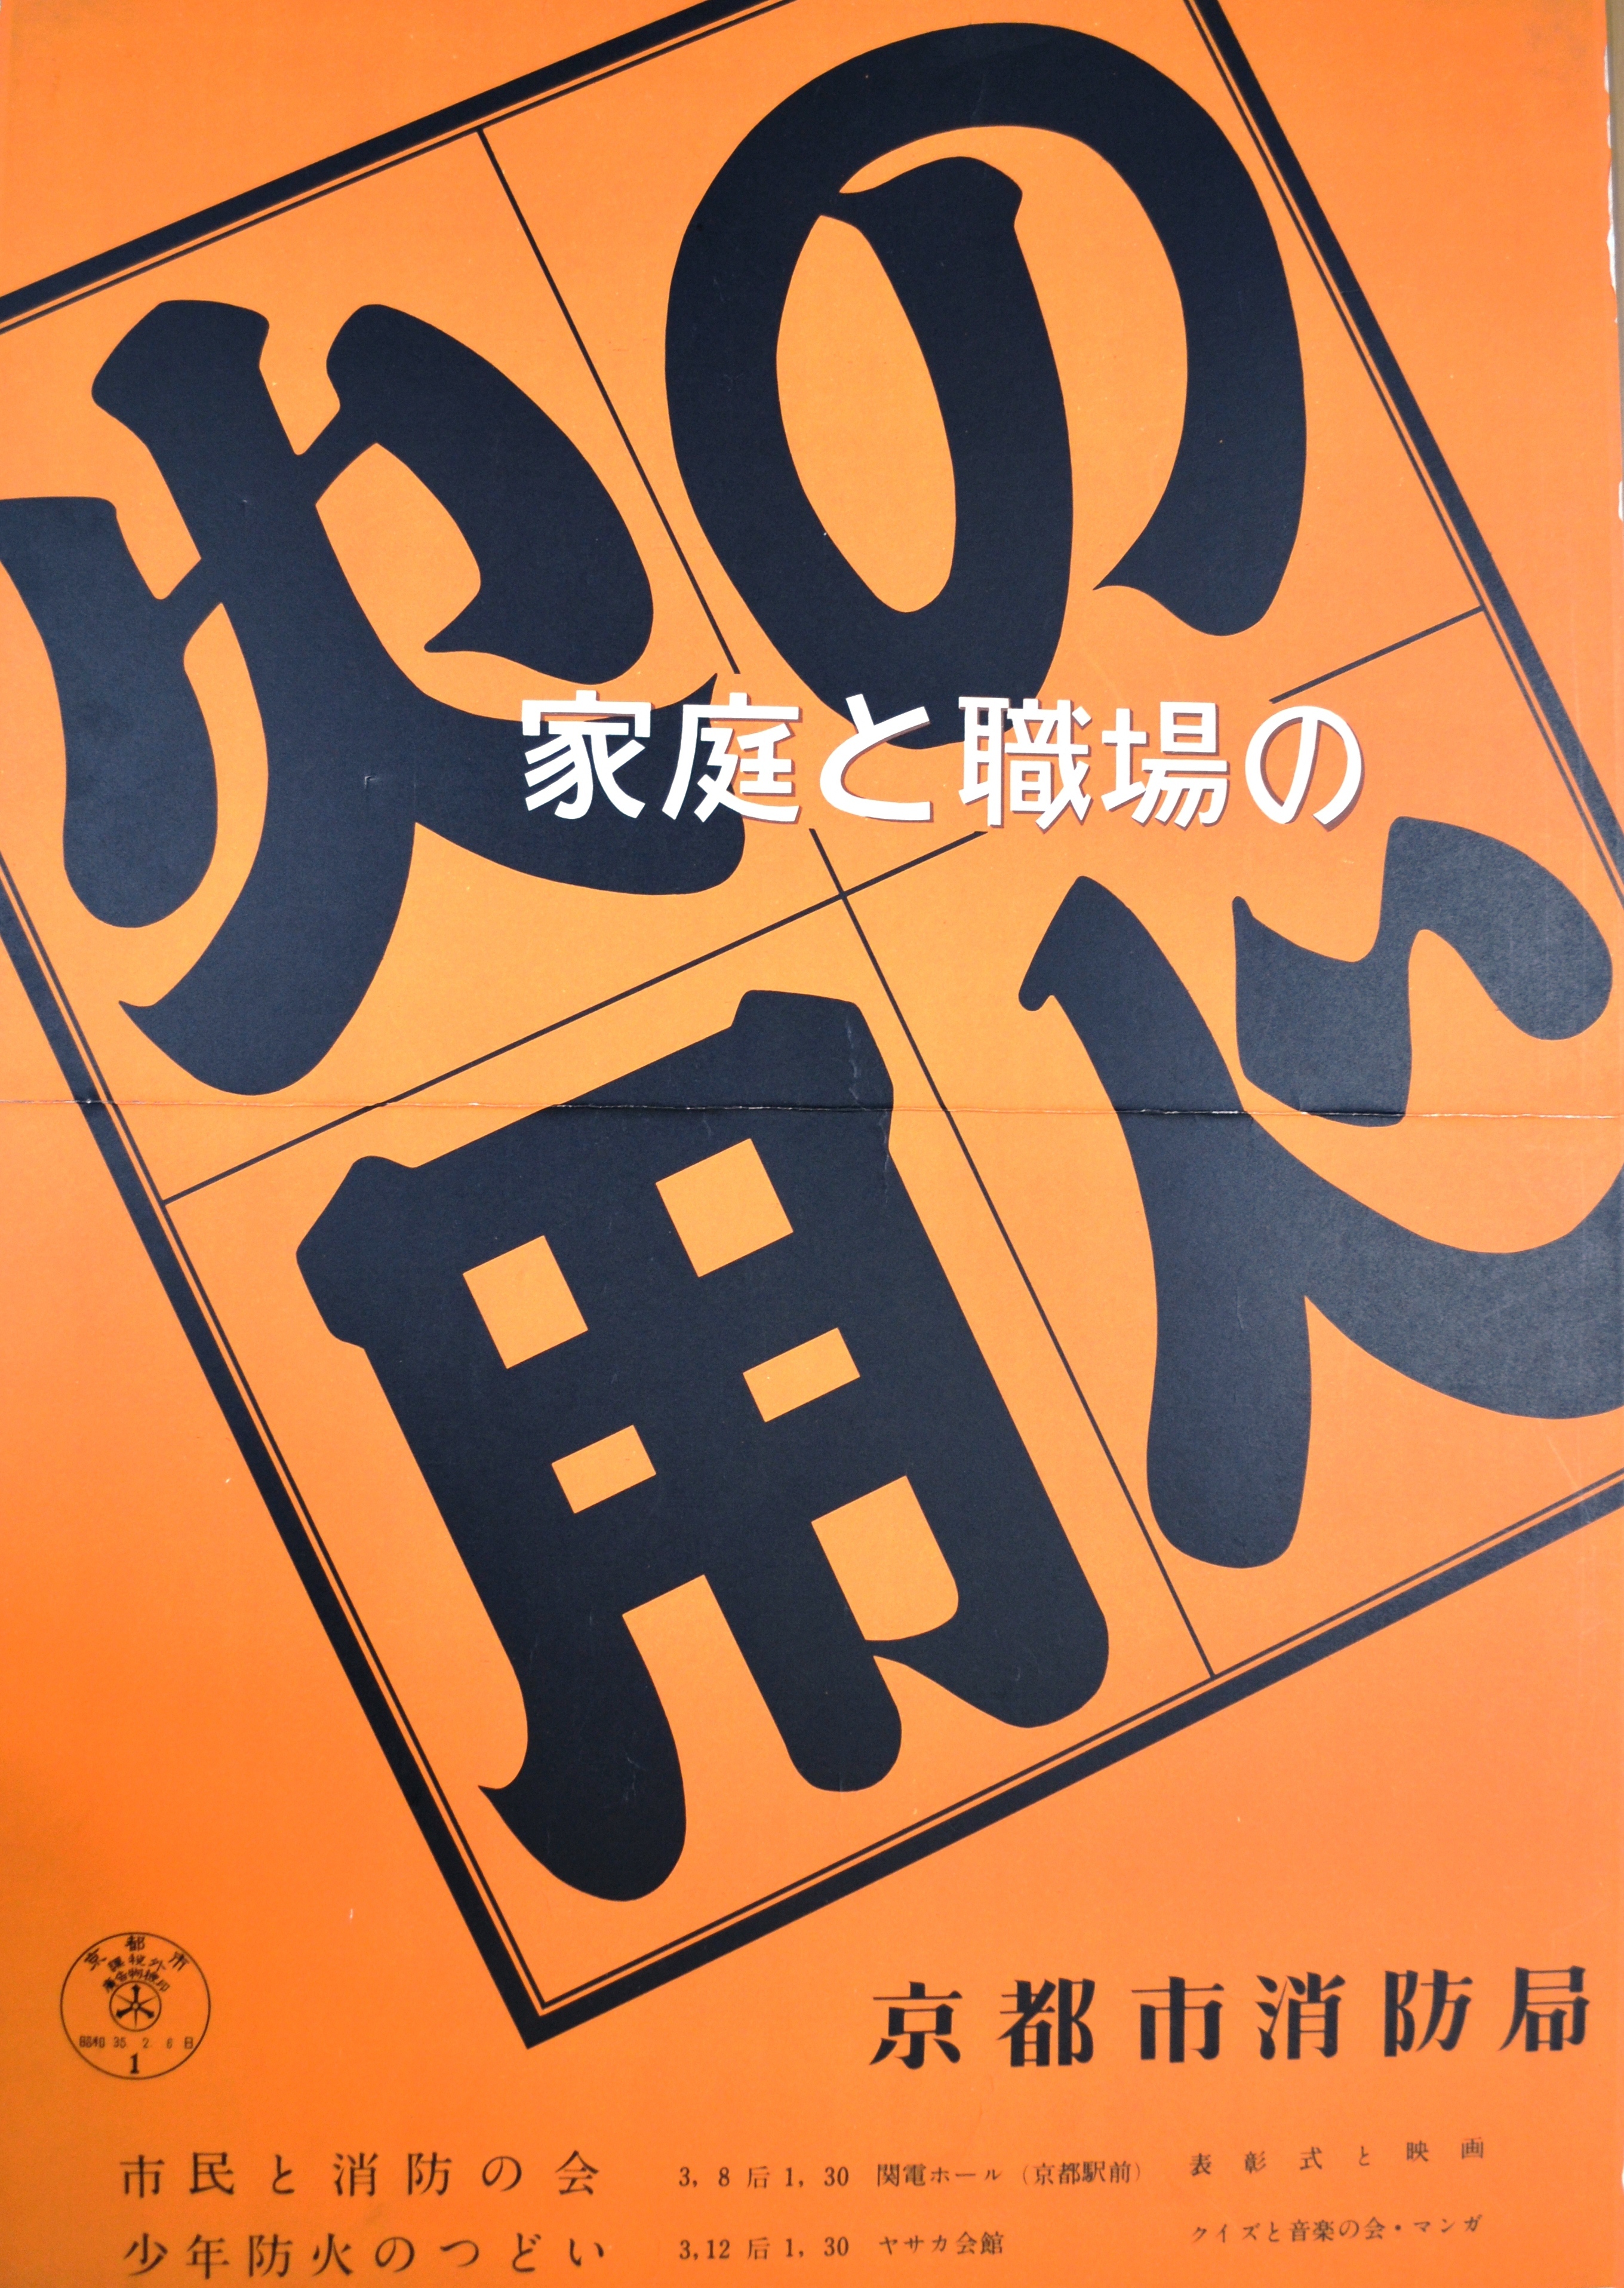 京都市消防局 昭和33年 42年の火災予防啓発ポスター